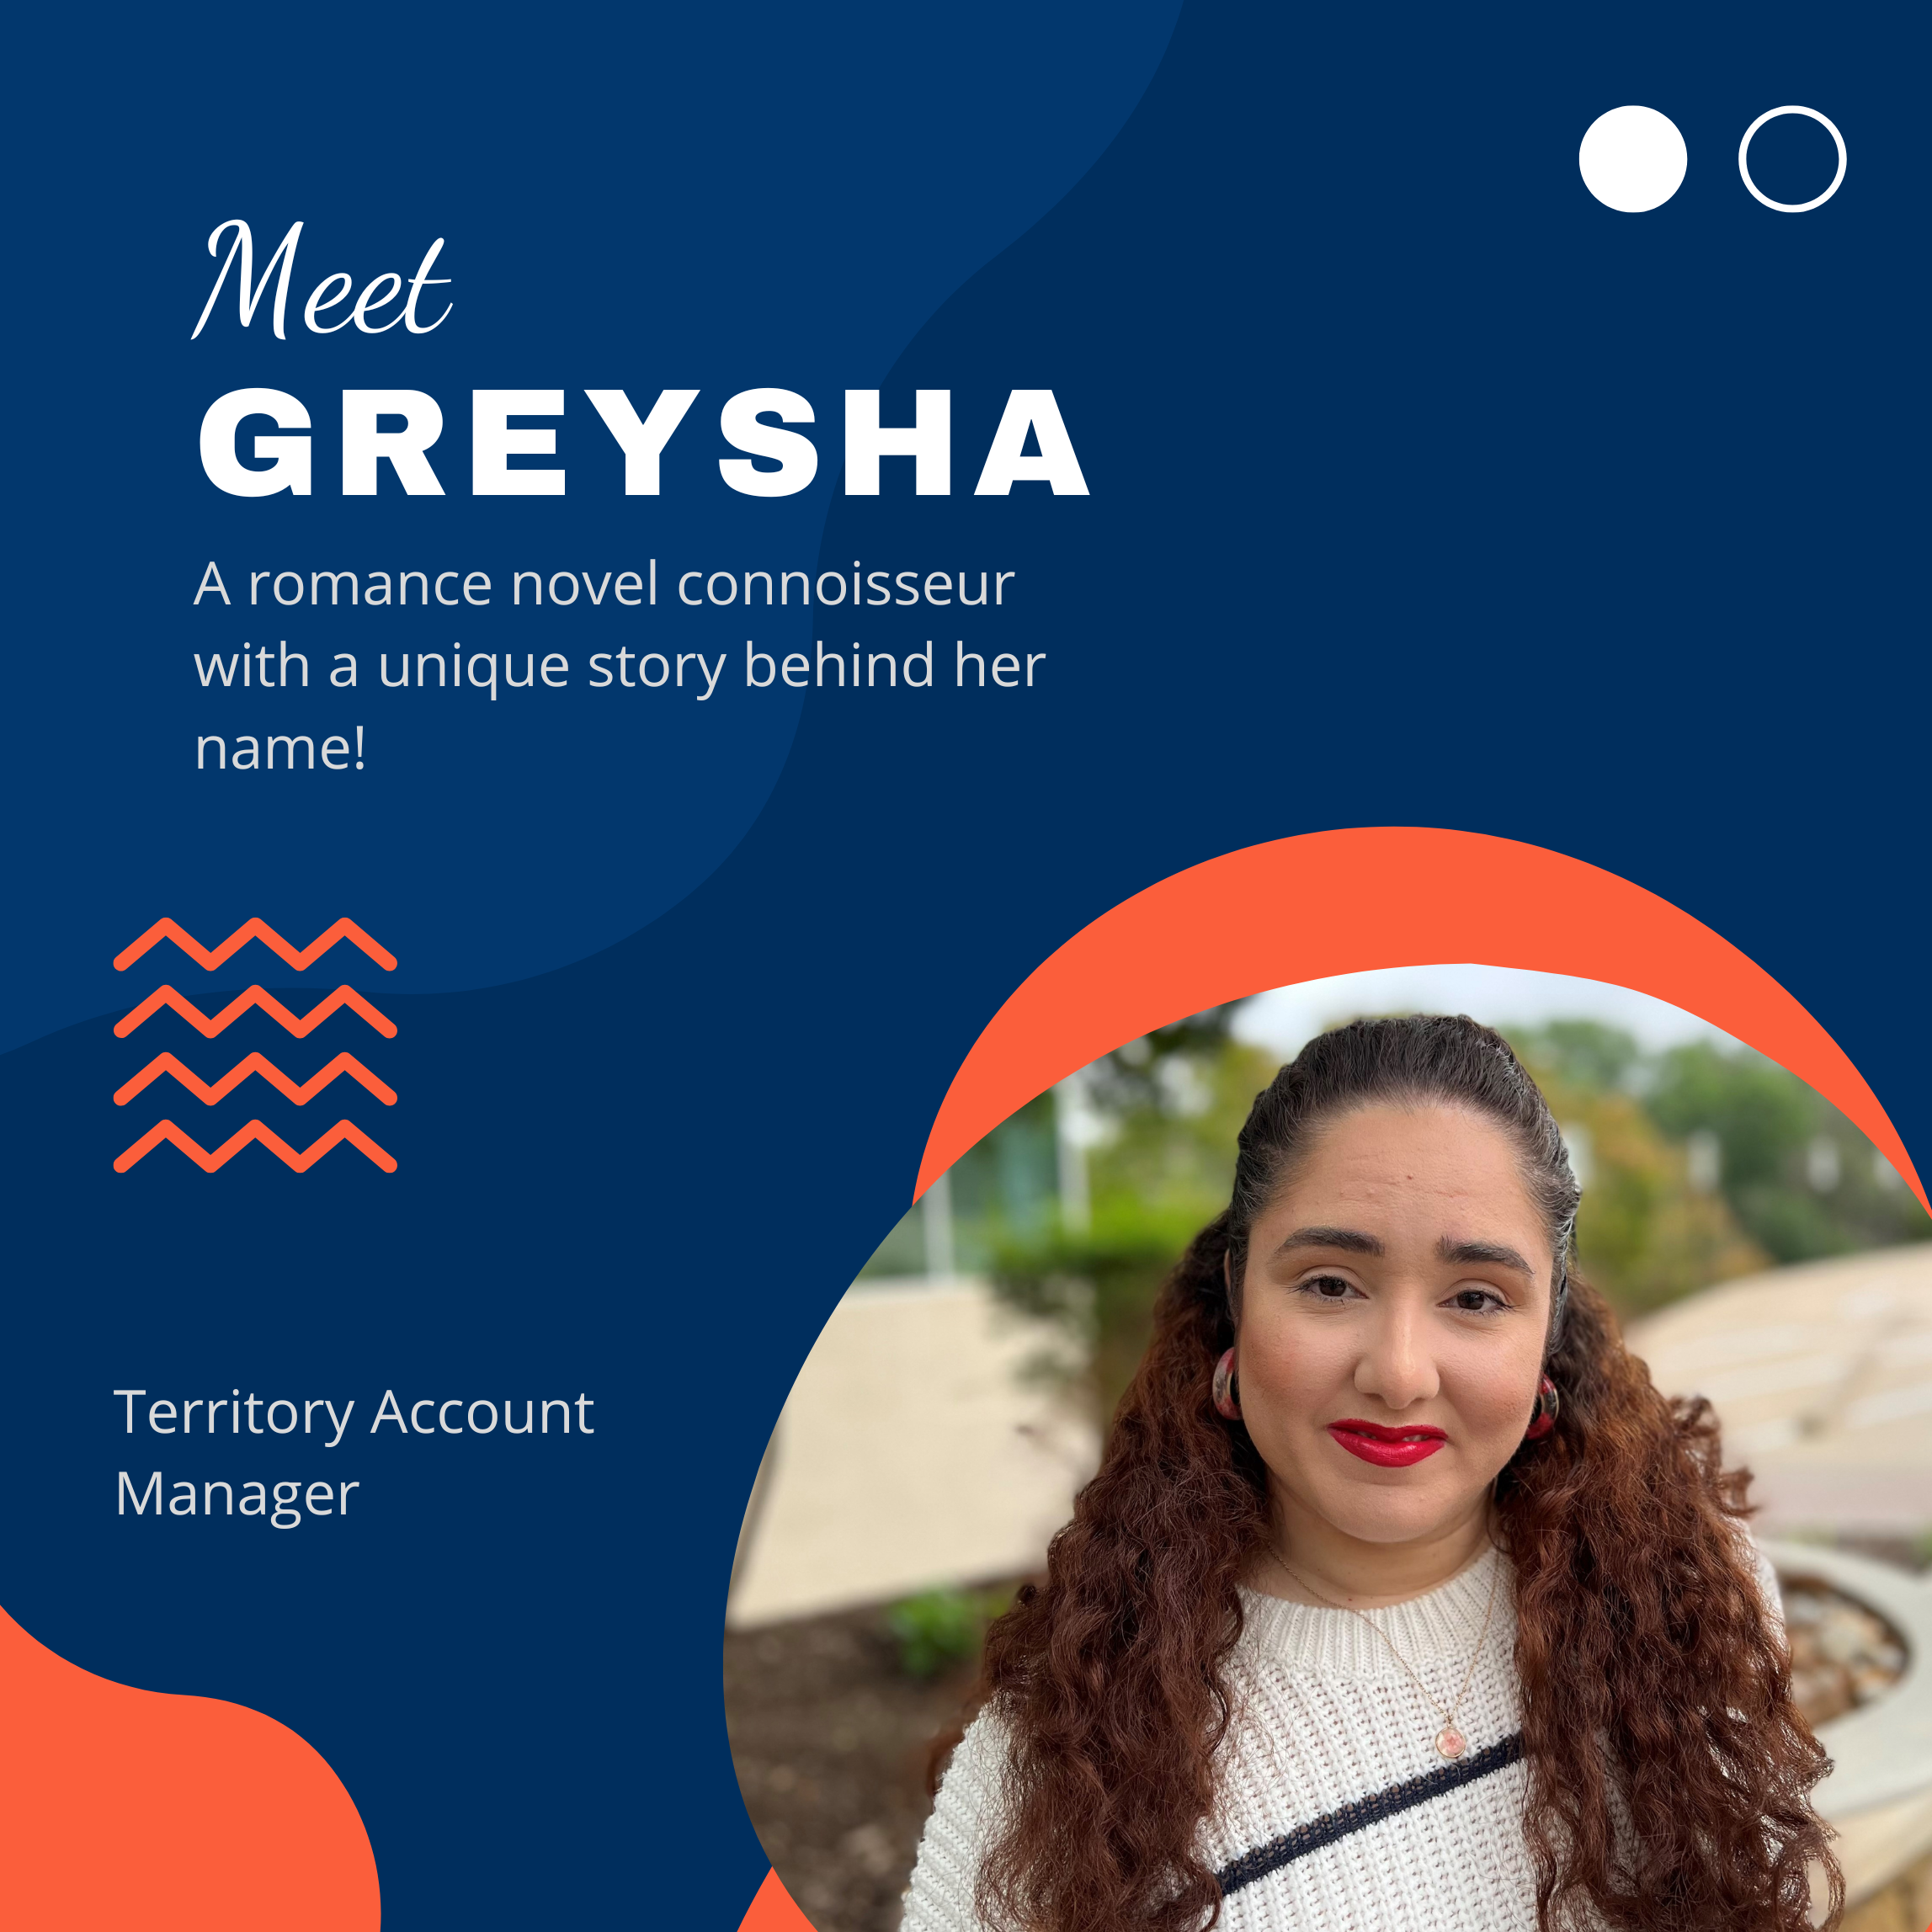 Meet the Team - Greysha